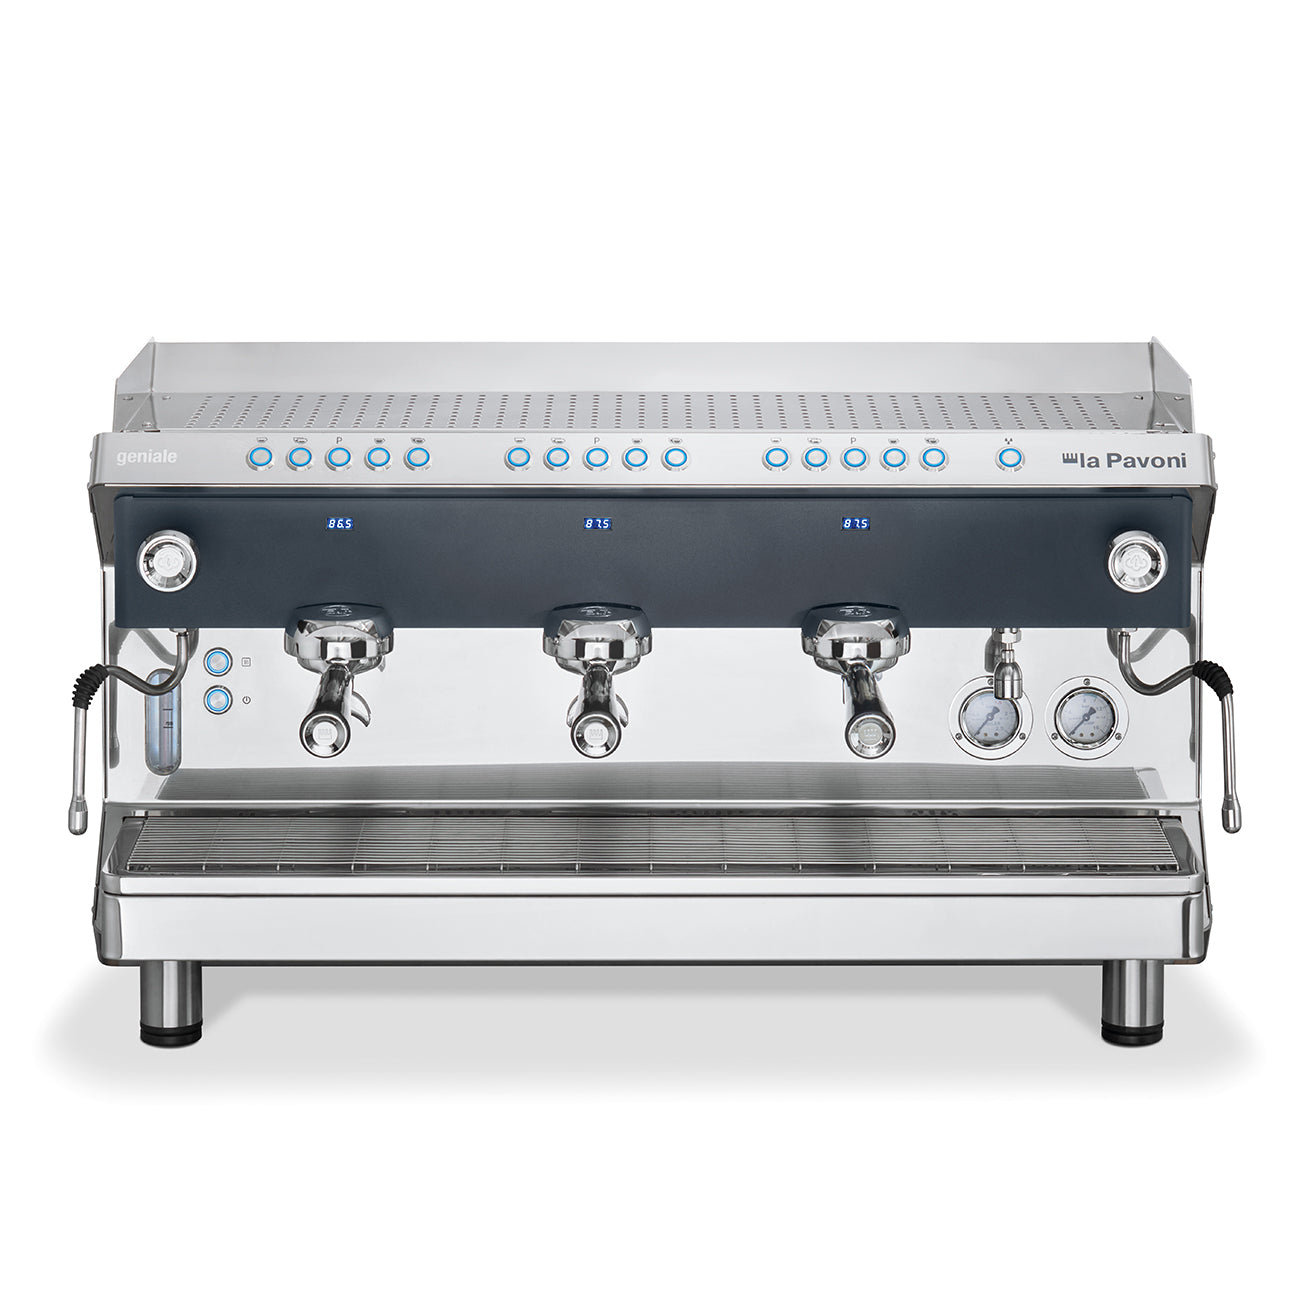 La Pavoni - GENIALE 3 Group Automatic Espresso Coffee Machine JD Catering Equipment Solutions Ltd